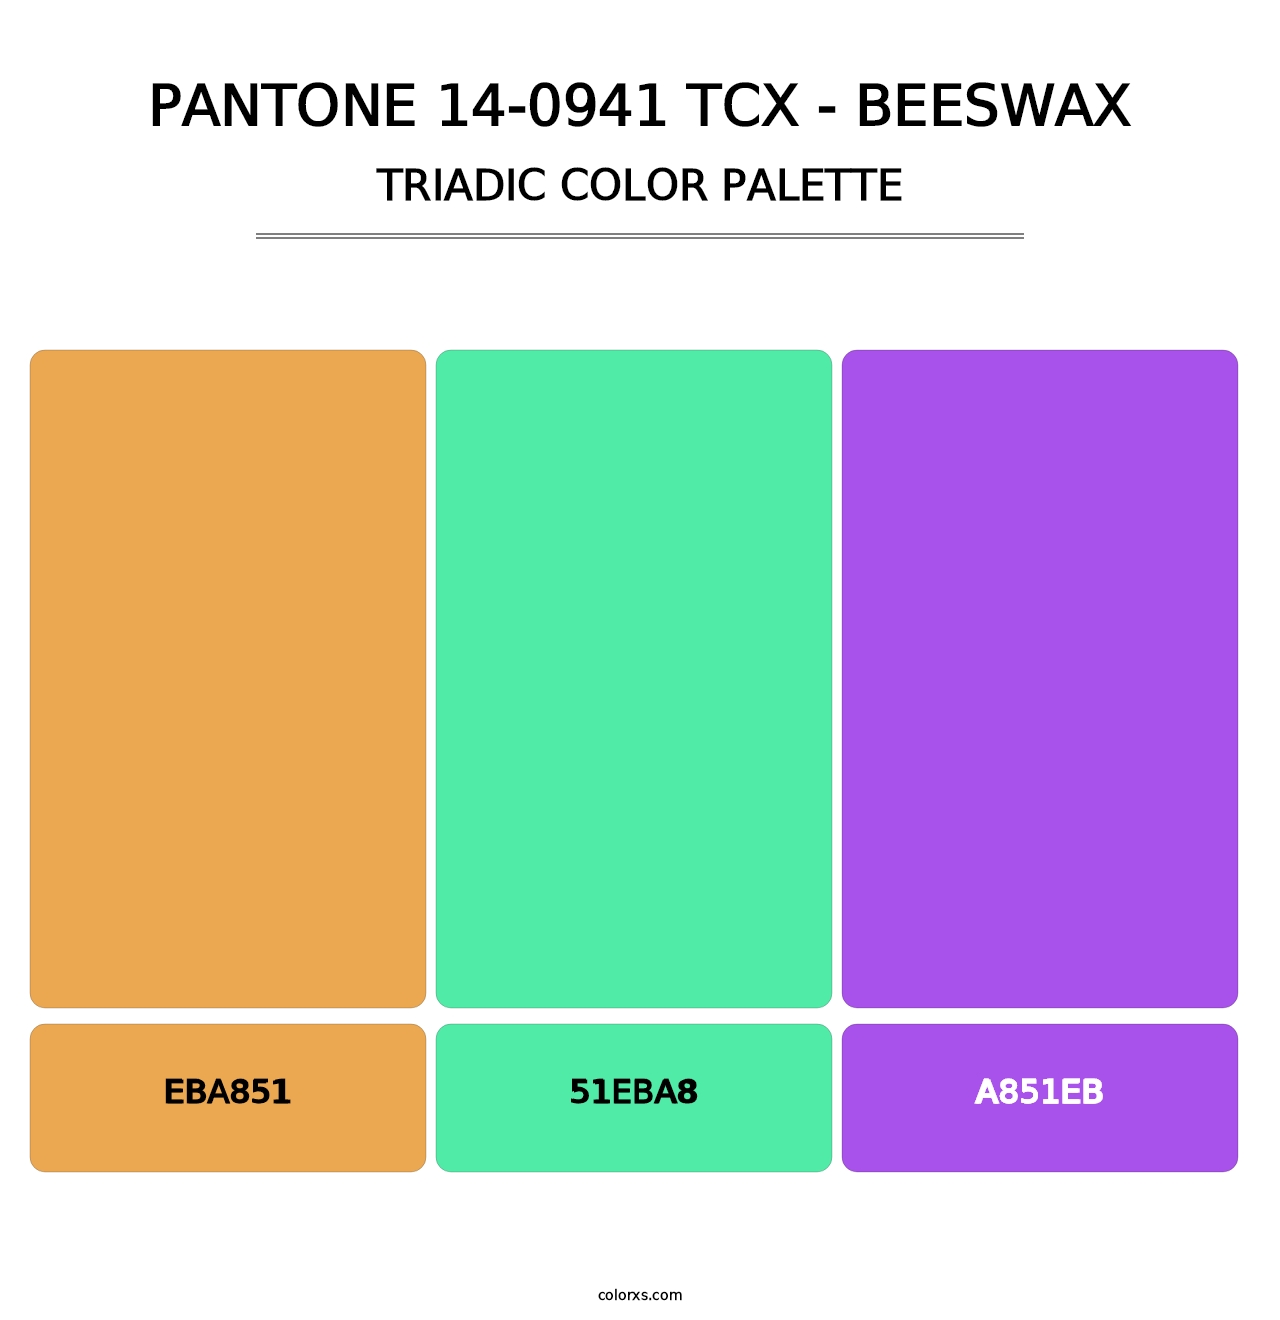 PANTONE 14-0941 TCX - Beeswax - Triadic Color Palette